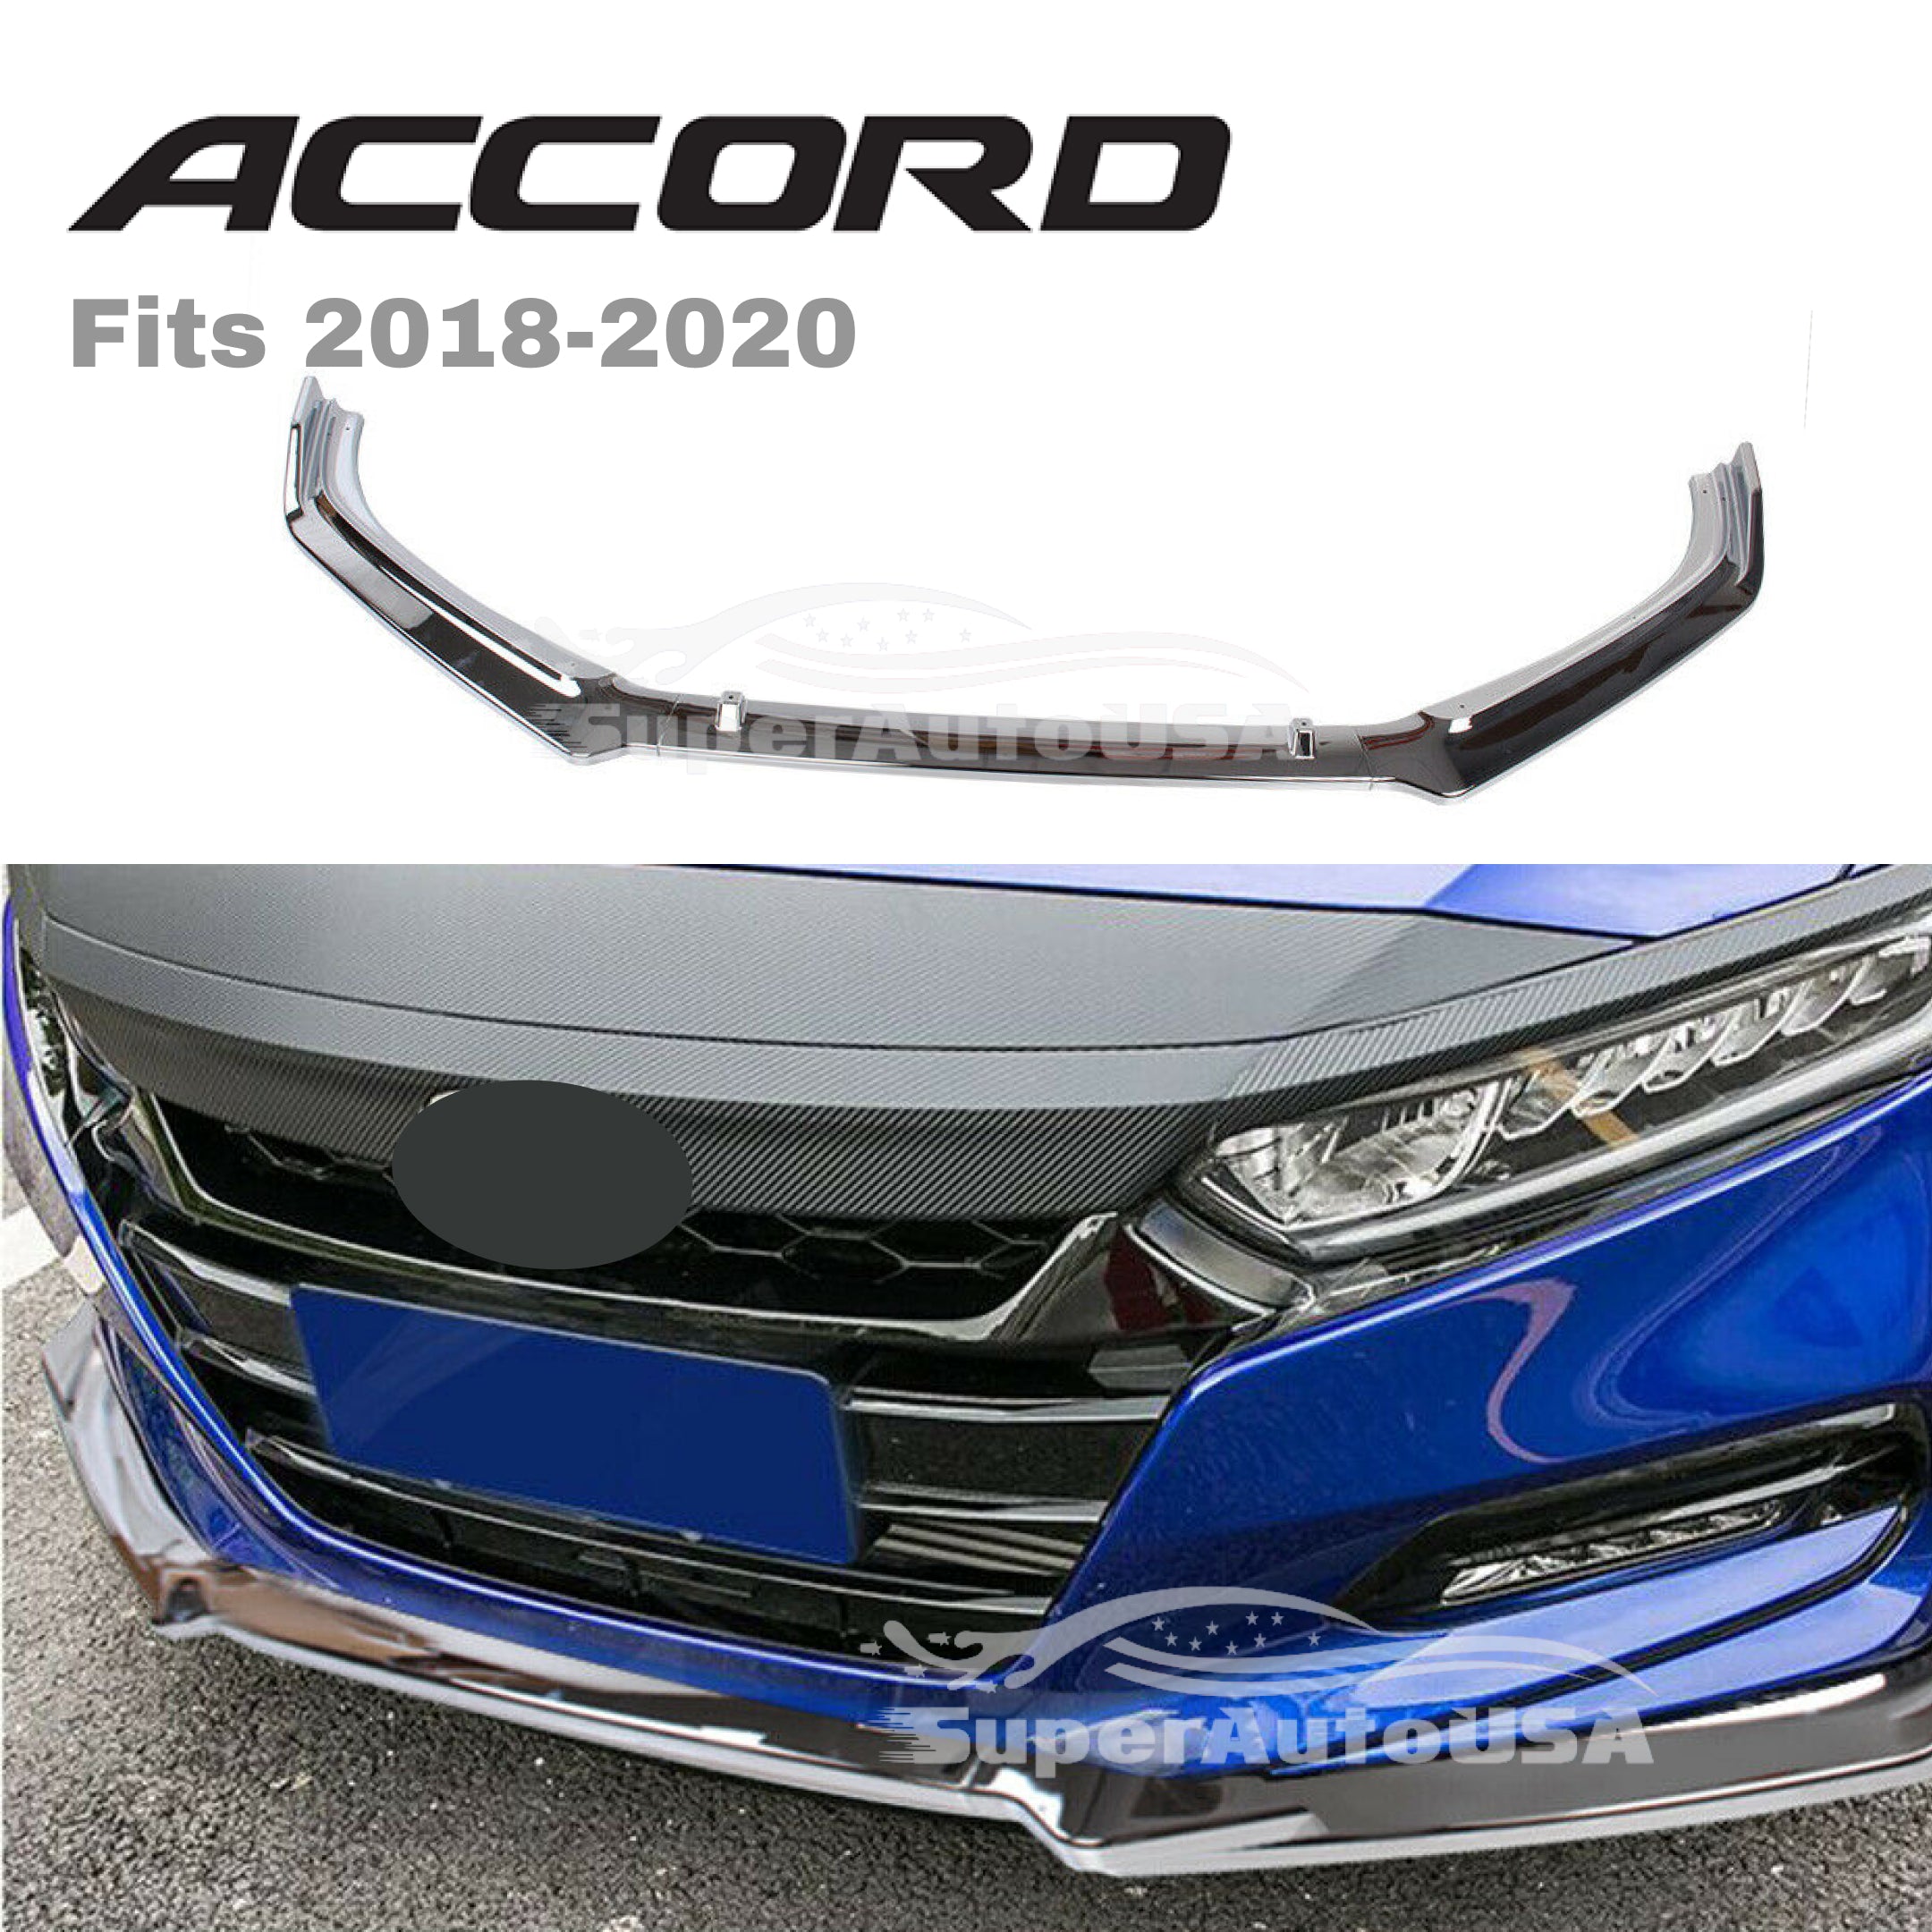 Front Spoiler & Splitters | Fits 2018- 2020 Honda Accord 4Dr Sedan